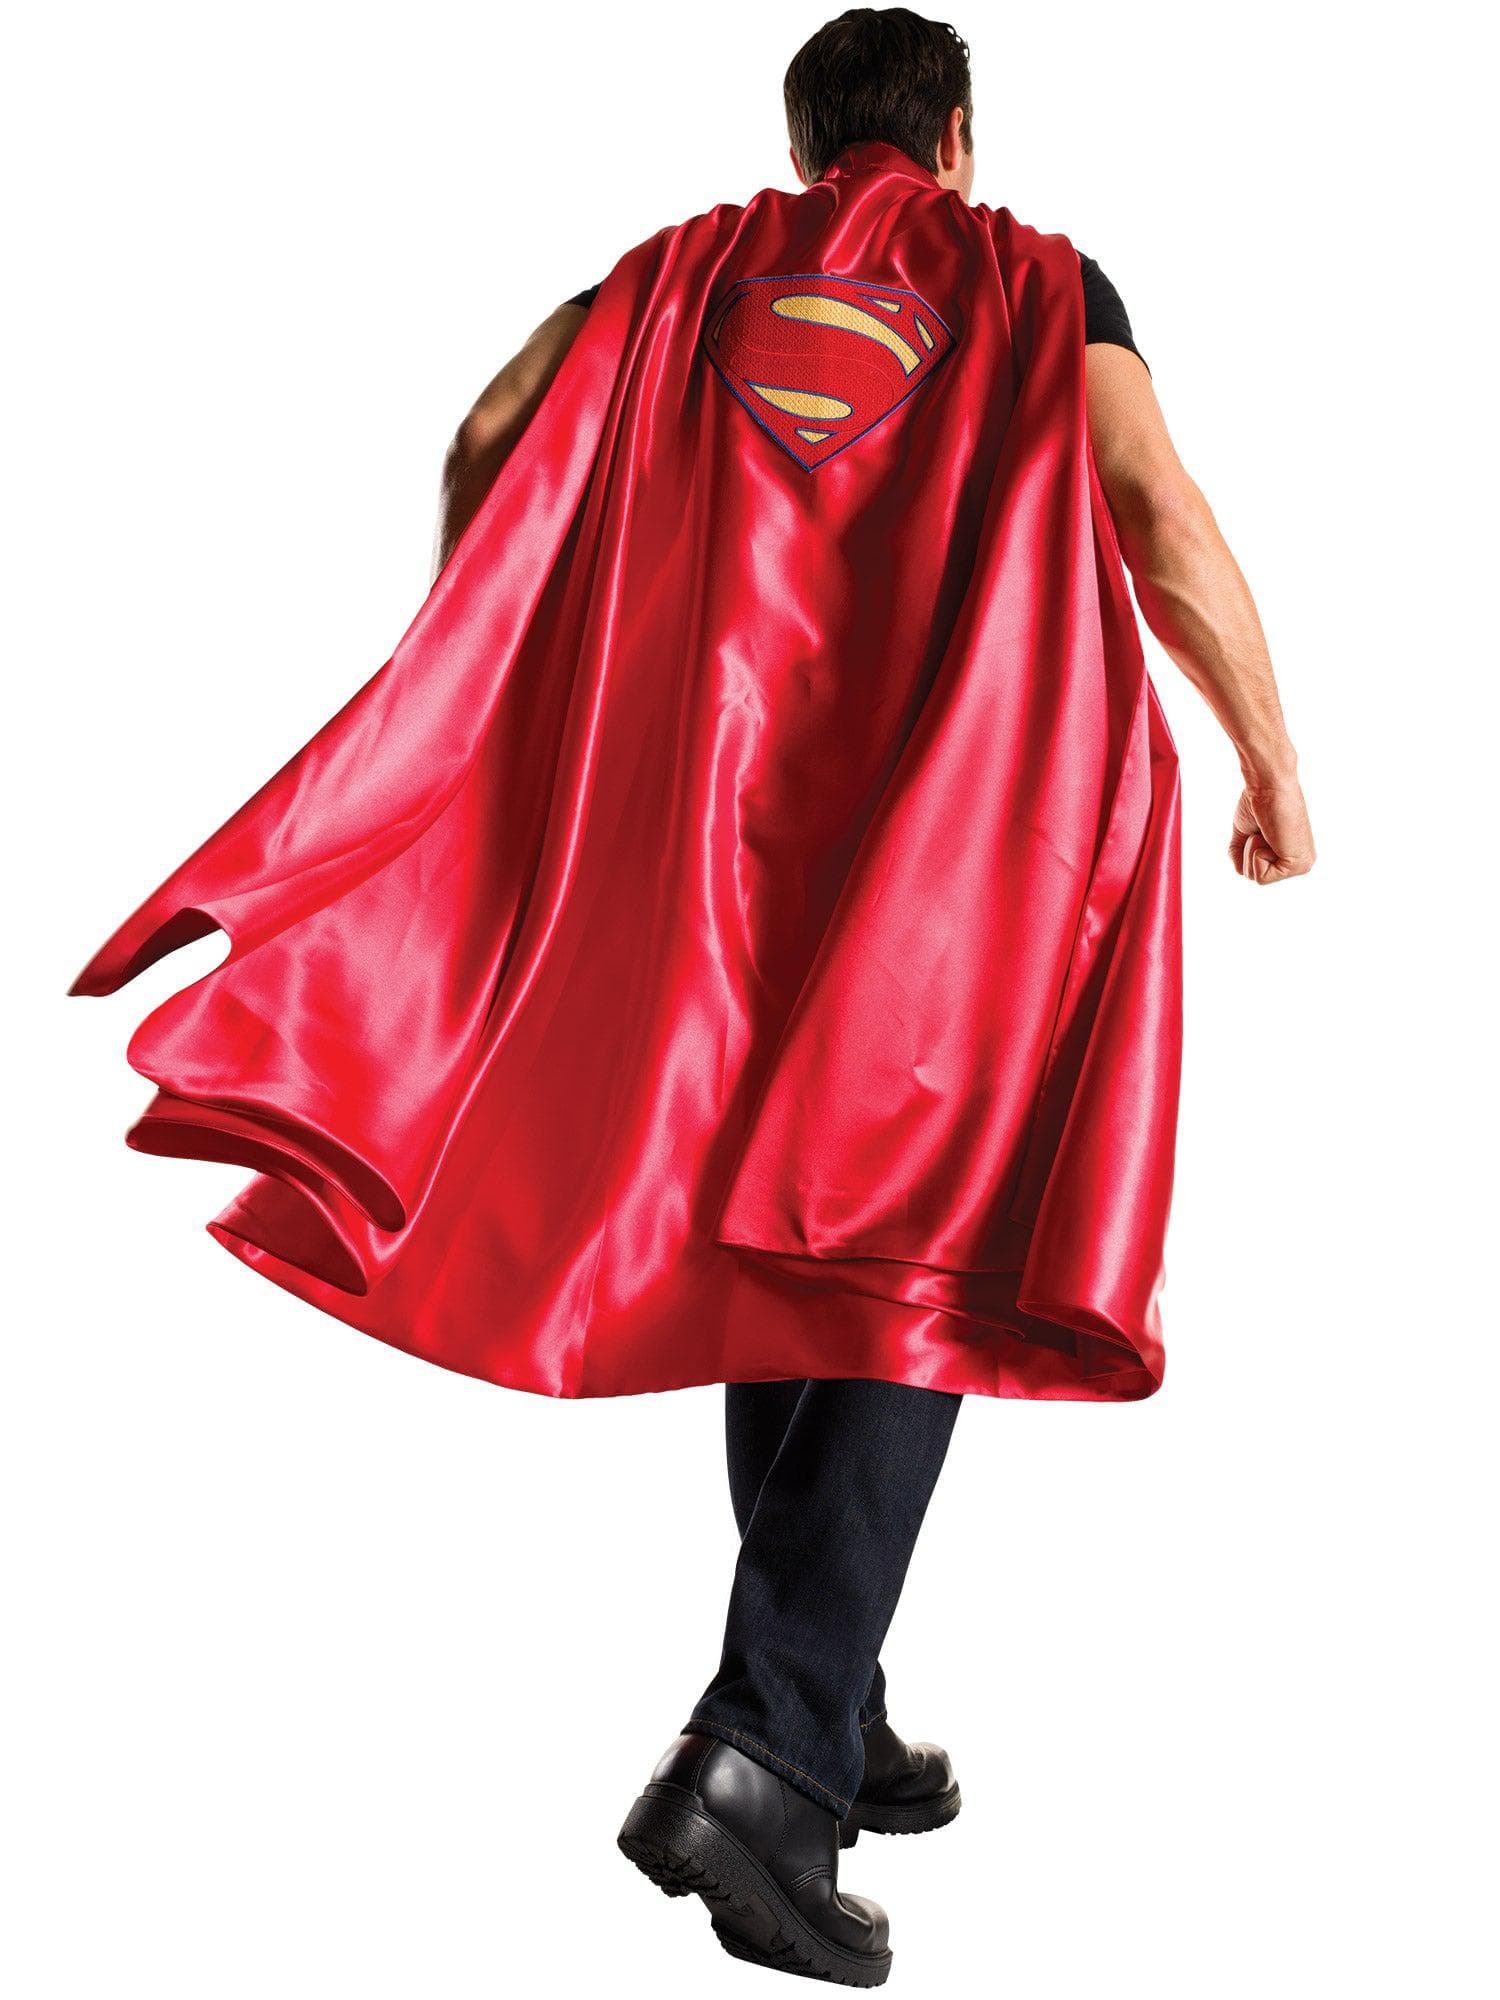 Adult Justice League Superman Deluxe Costume - costumes.com